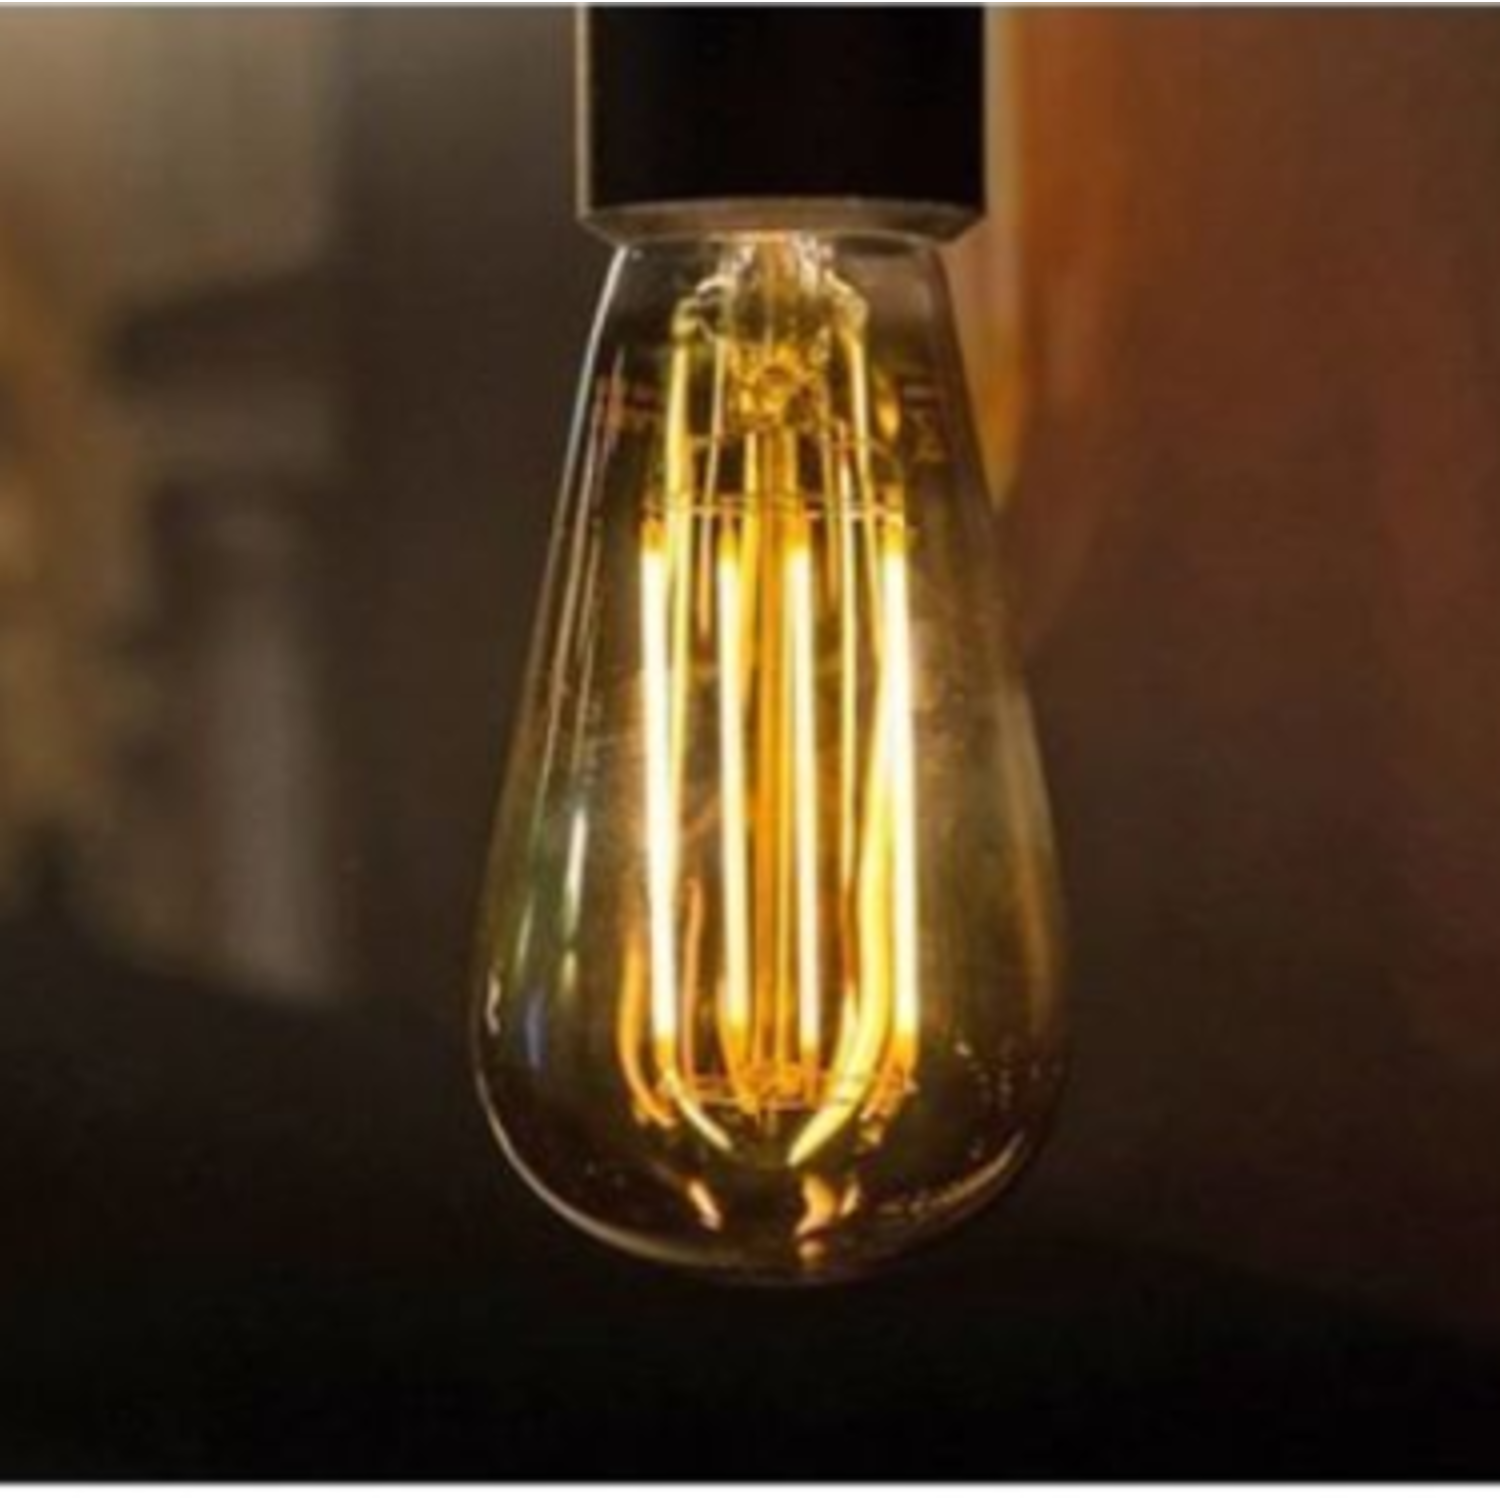 Vernederen uitglijden Stressvol LED filament lamp lang dimbaar 6W amber - Leddepot.be